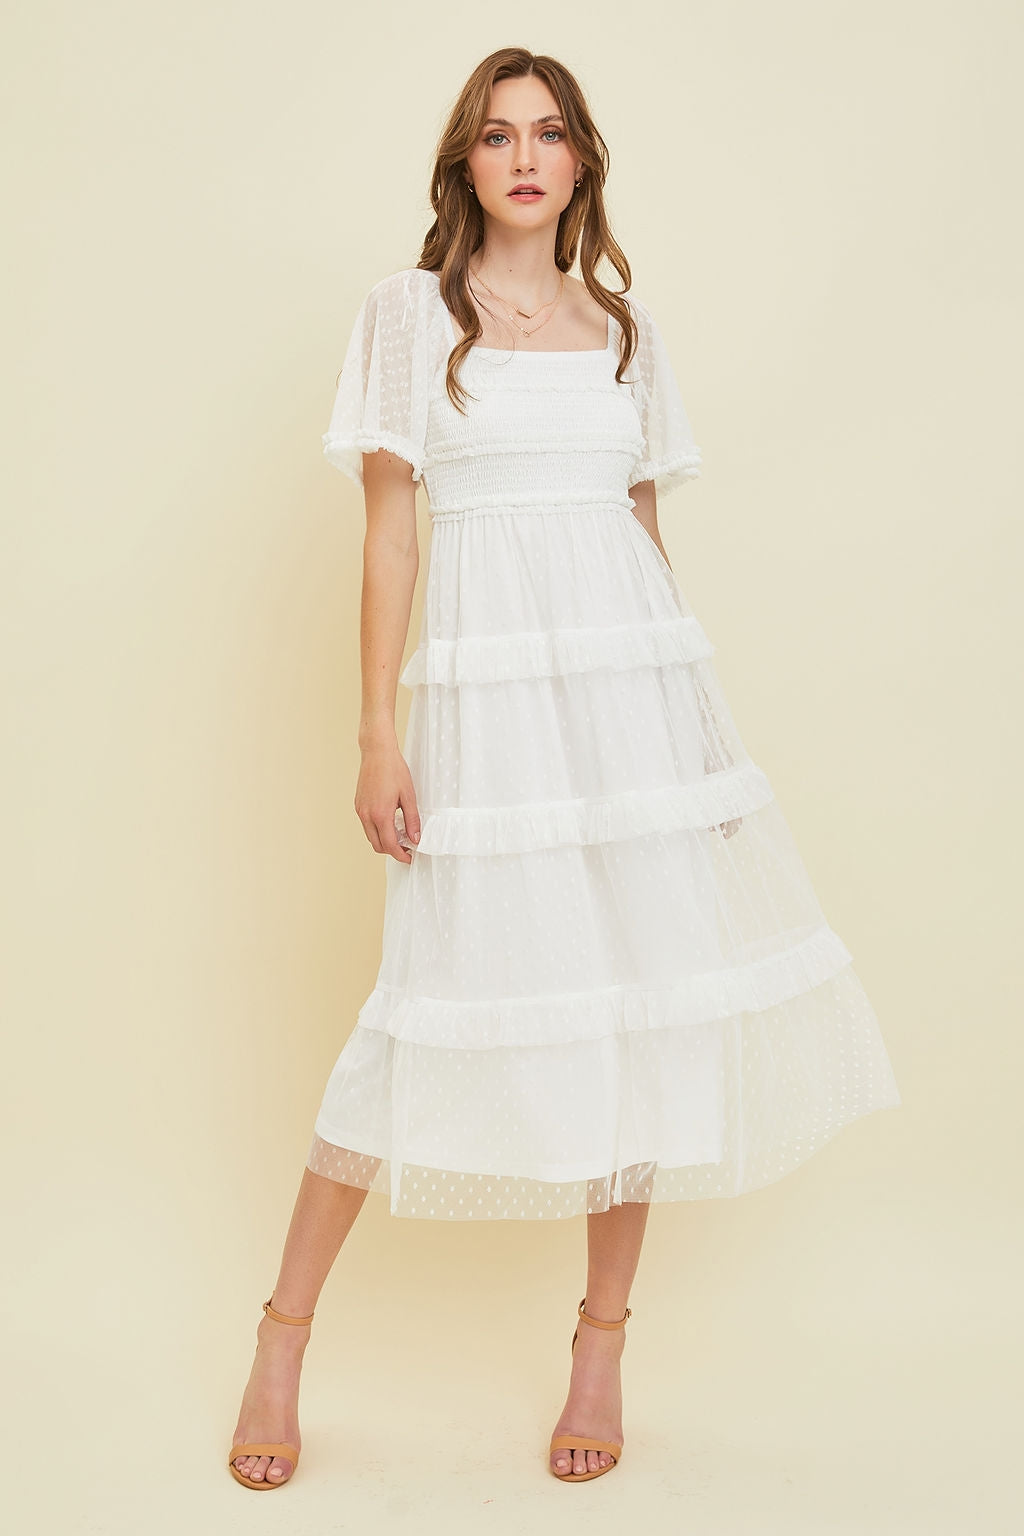 Romantic white dress for engagement party, bridal shower or rehersal dinner 